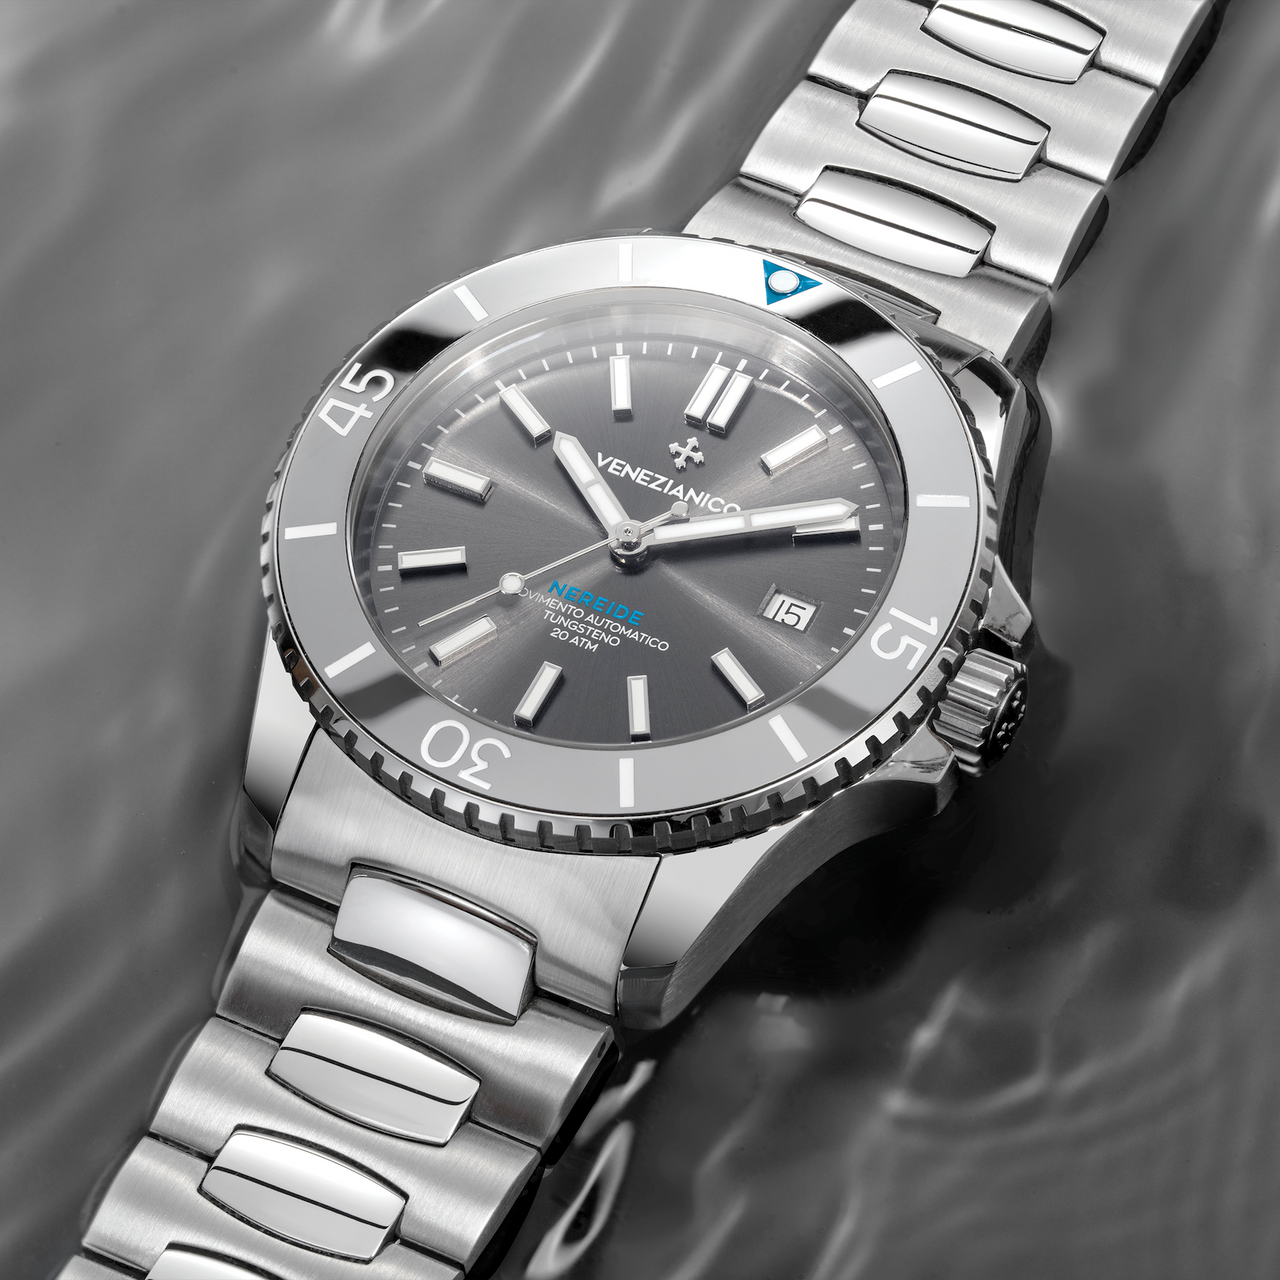 Venezianico Automatic Watch Nereide Tungsteno 4521502C